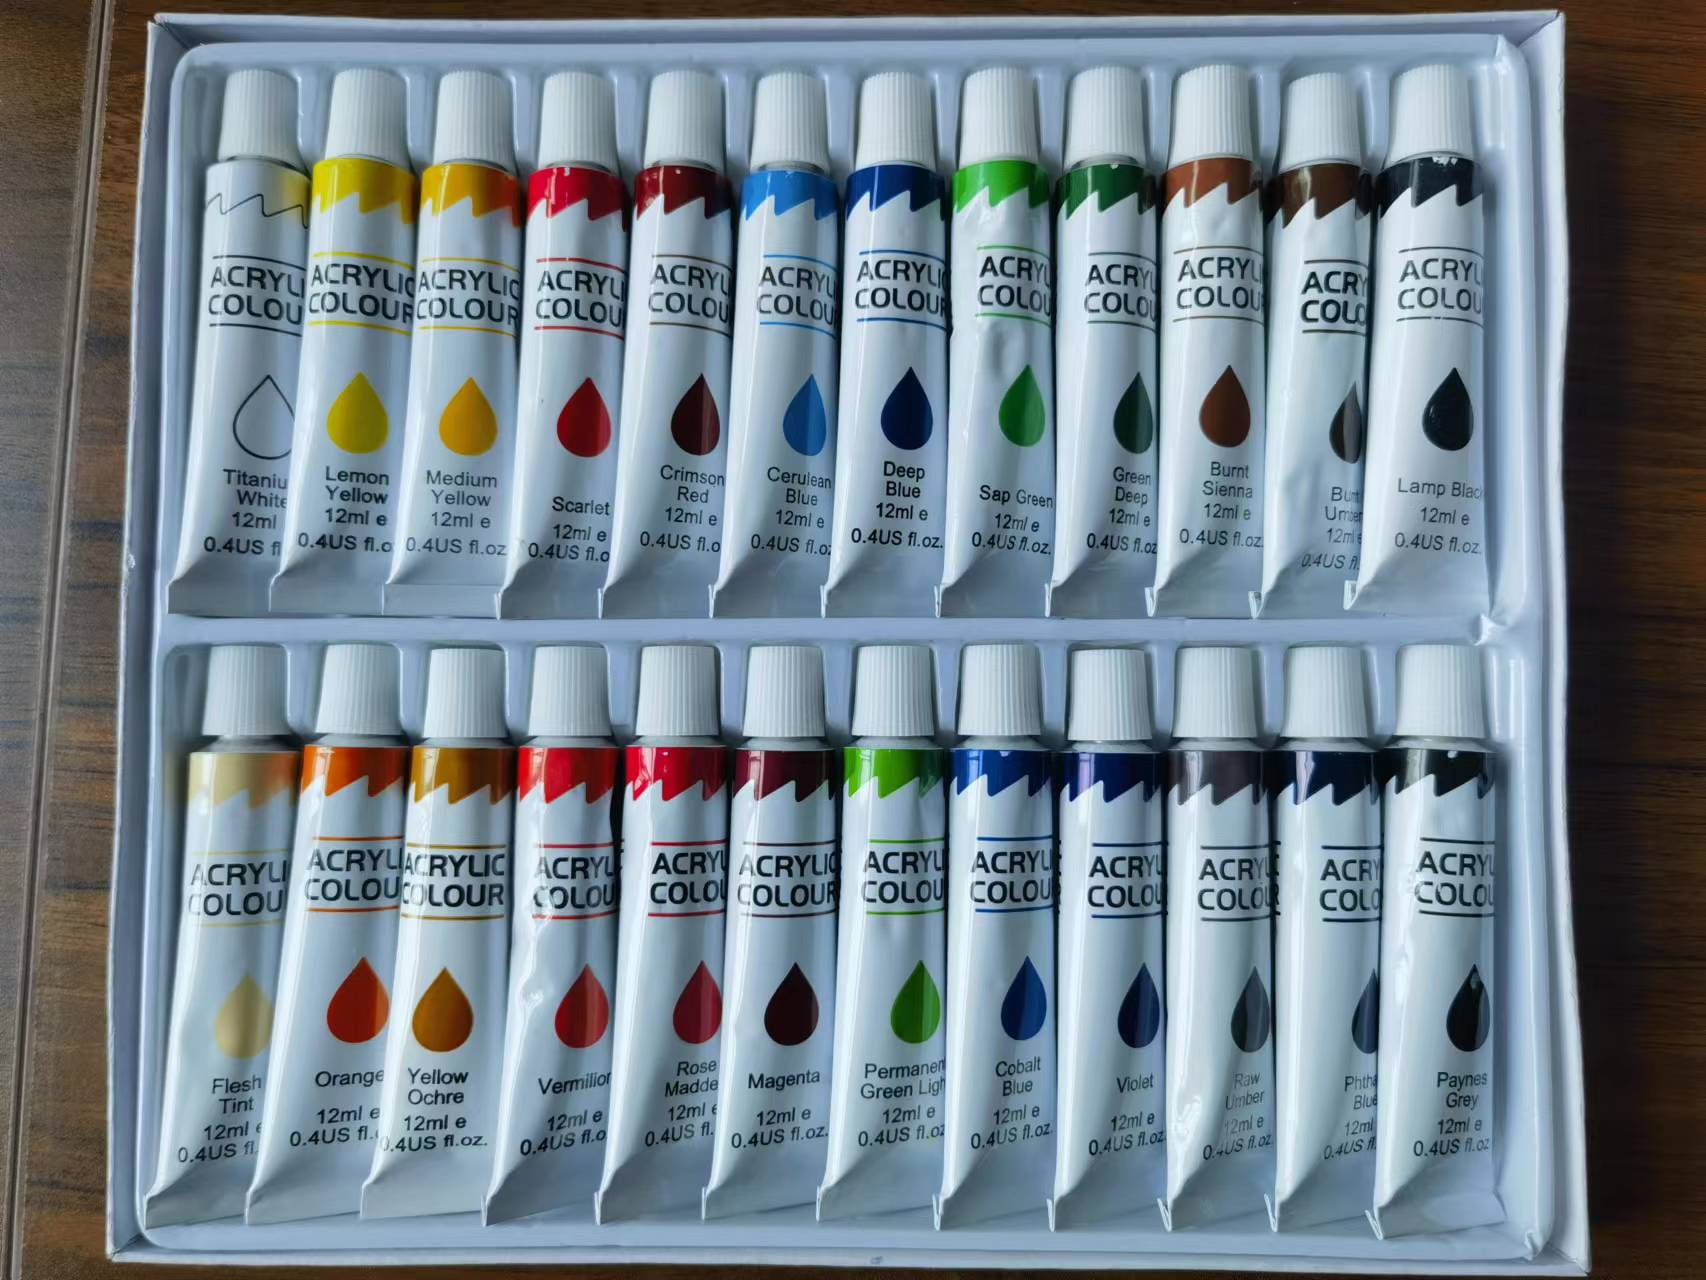 Fantastory fantastory acrylic paint set with 12 brushes, 24 colors